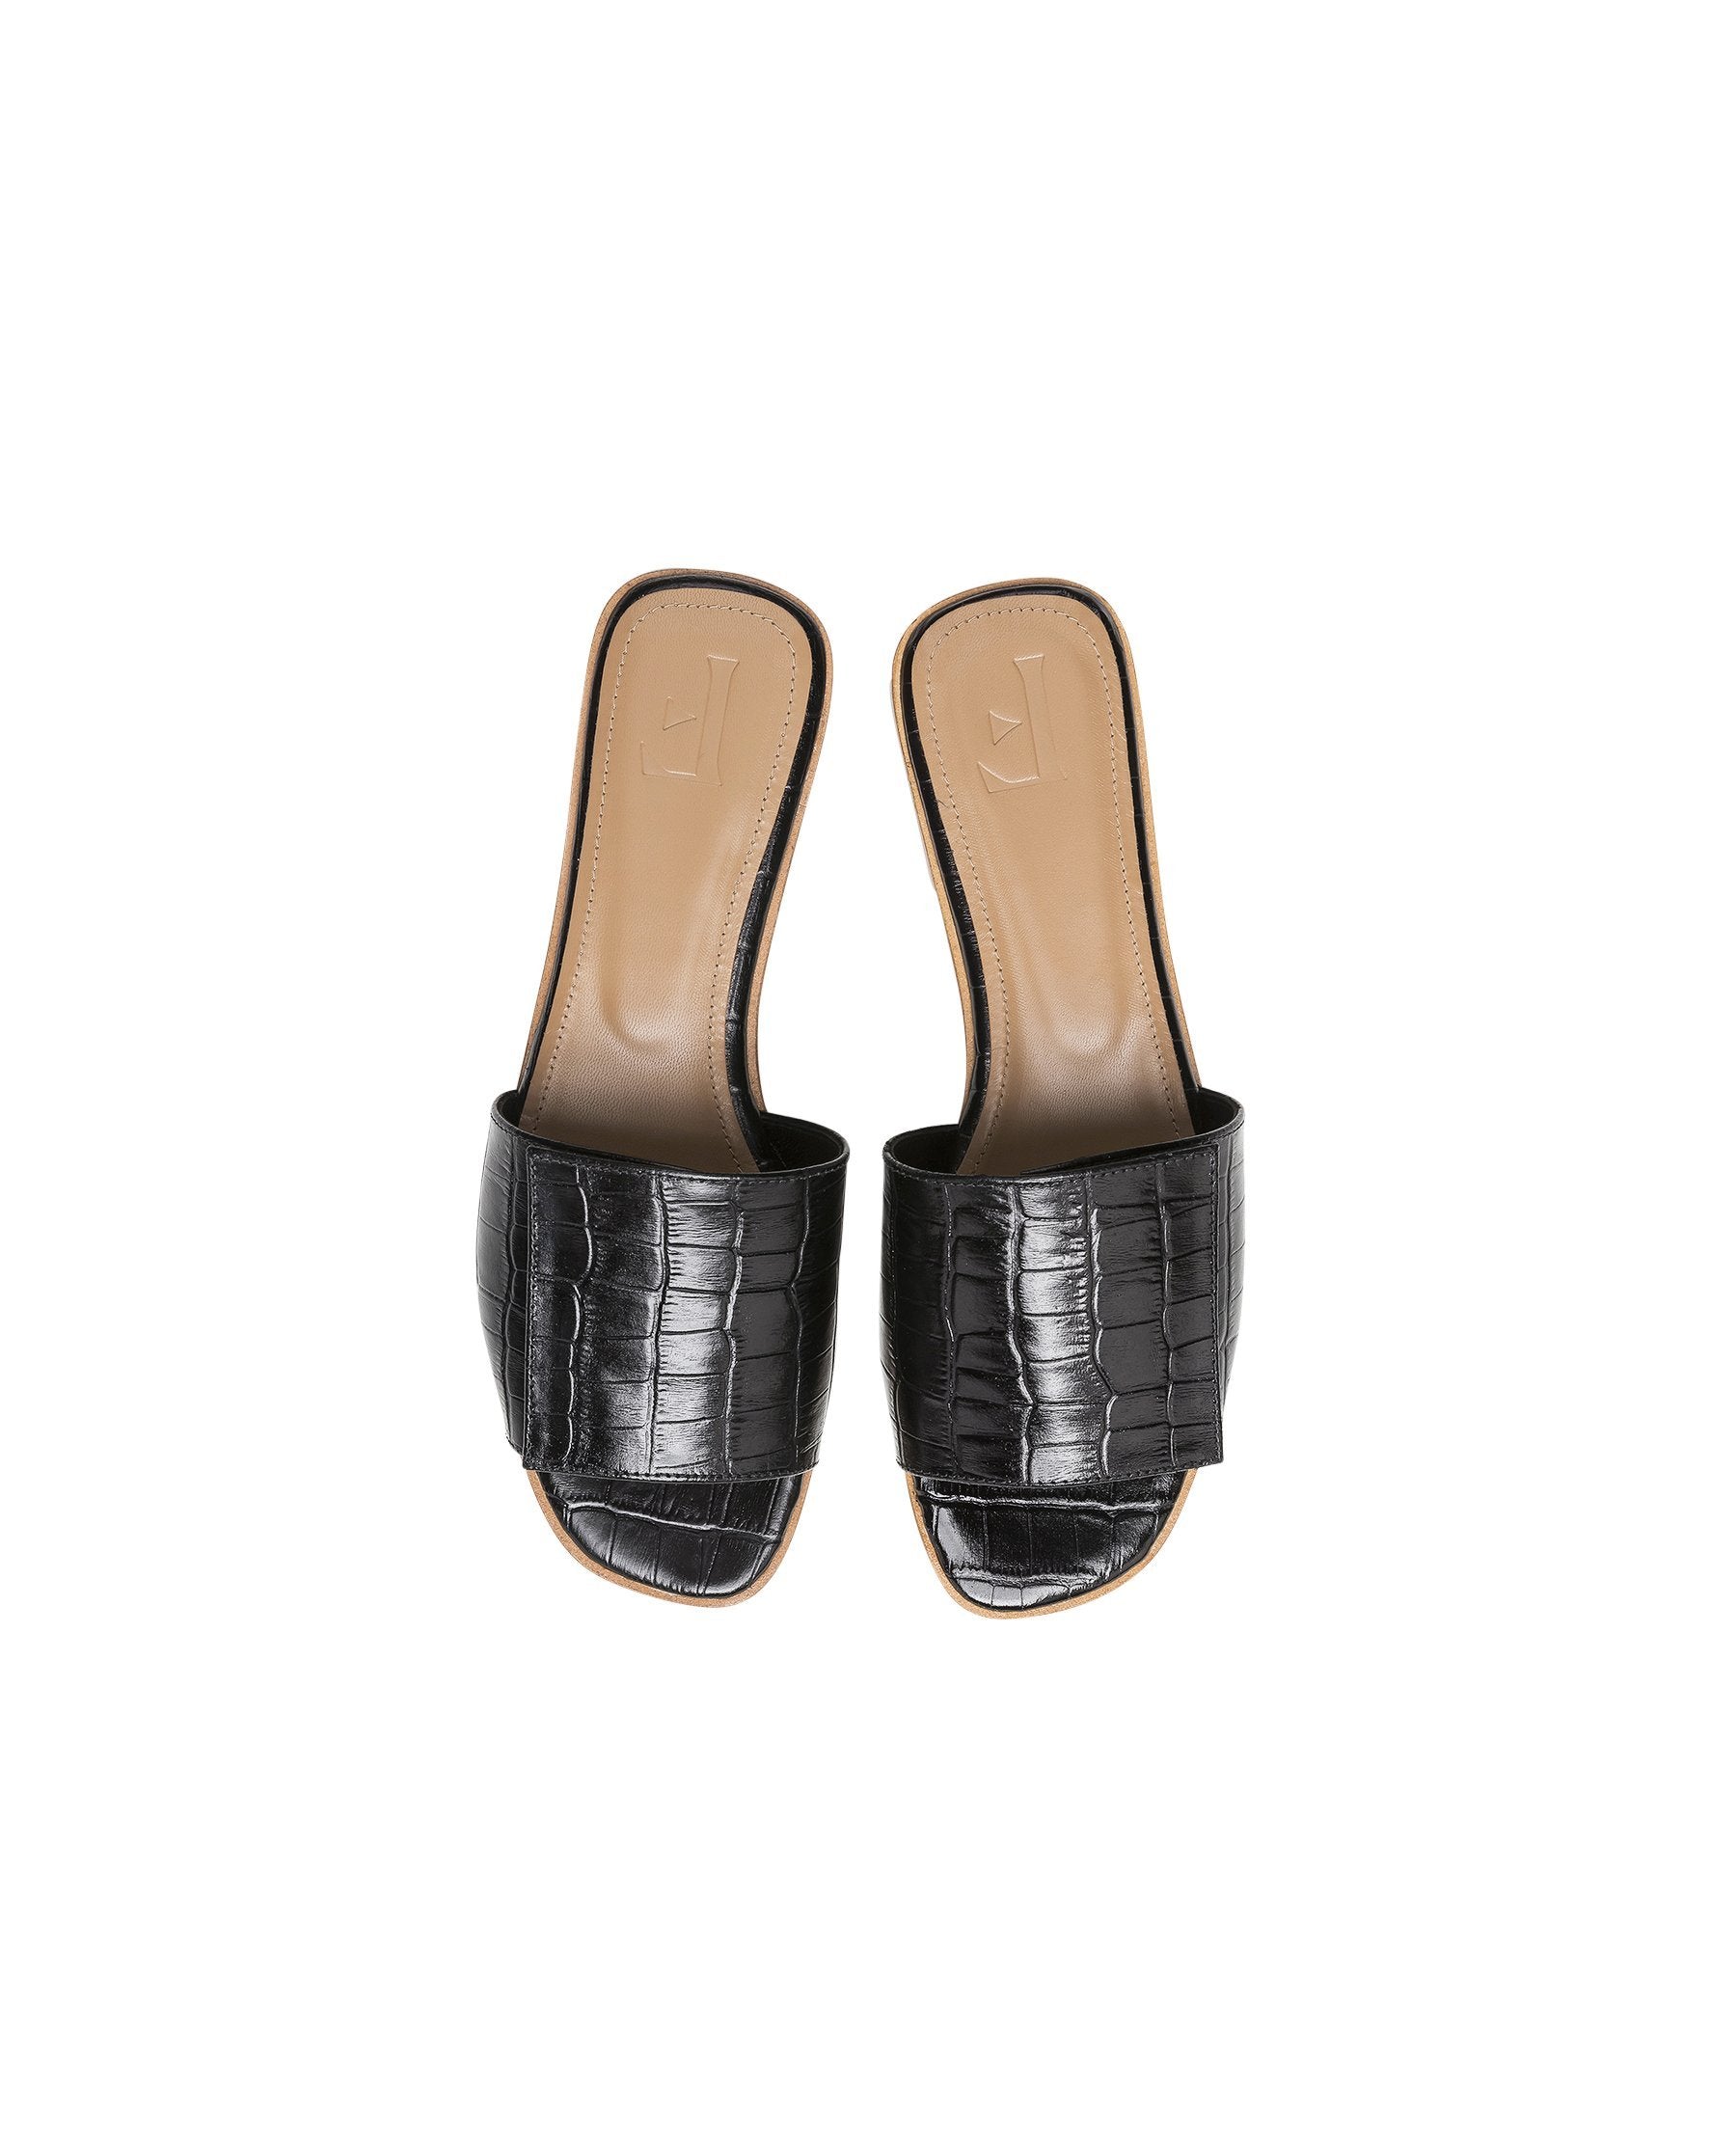 Yola Leather Croco Black Flats 20010711917-001 - 4